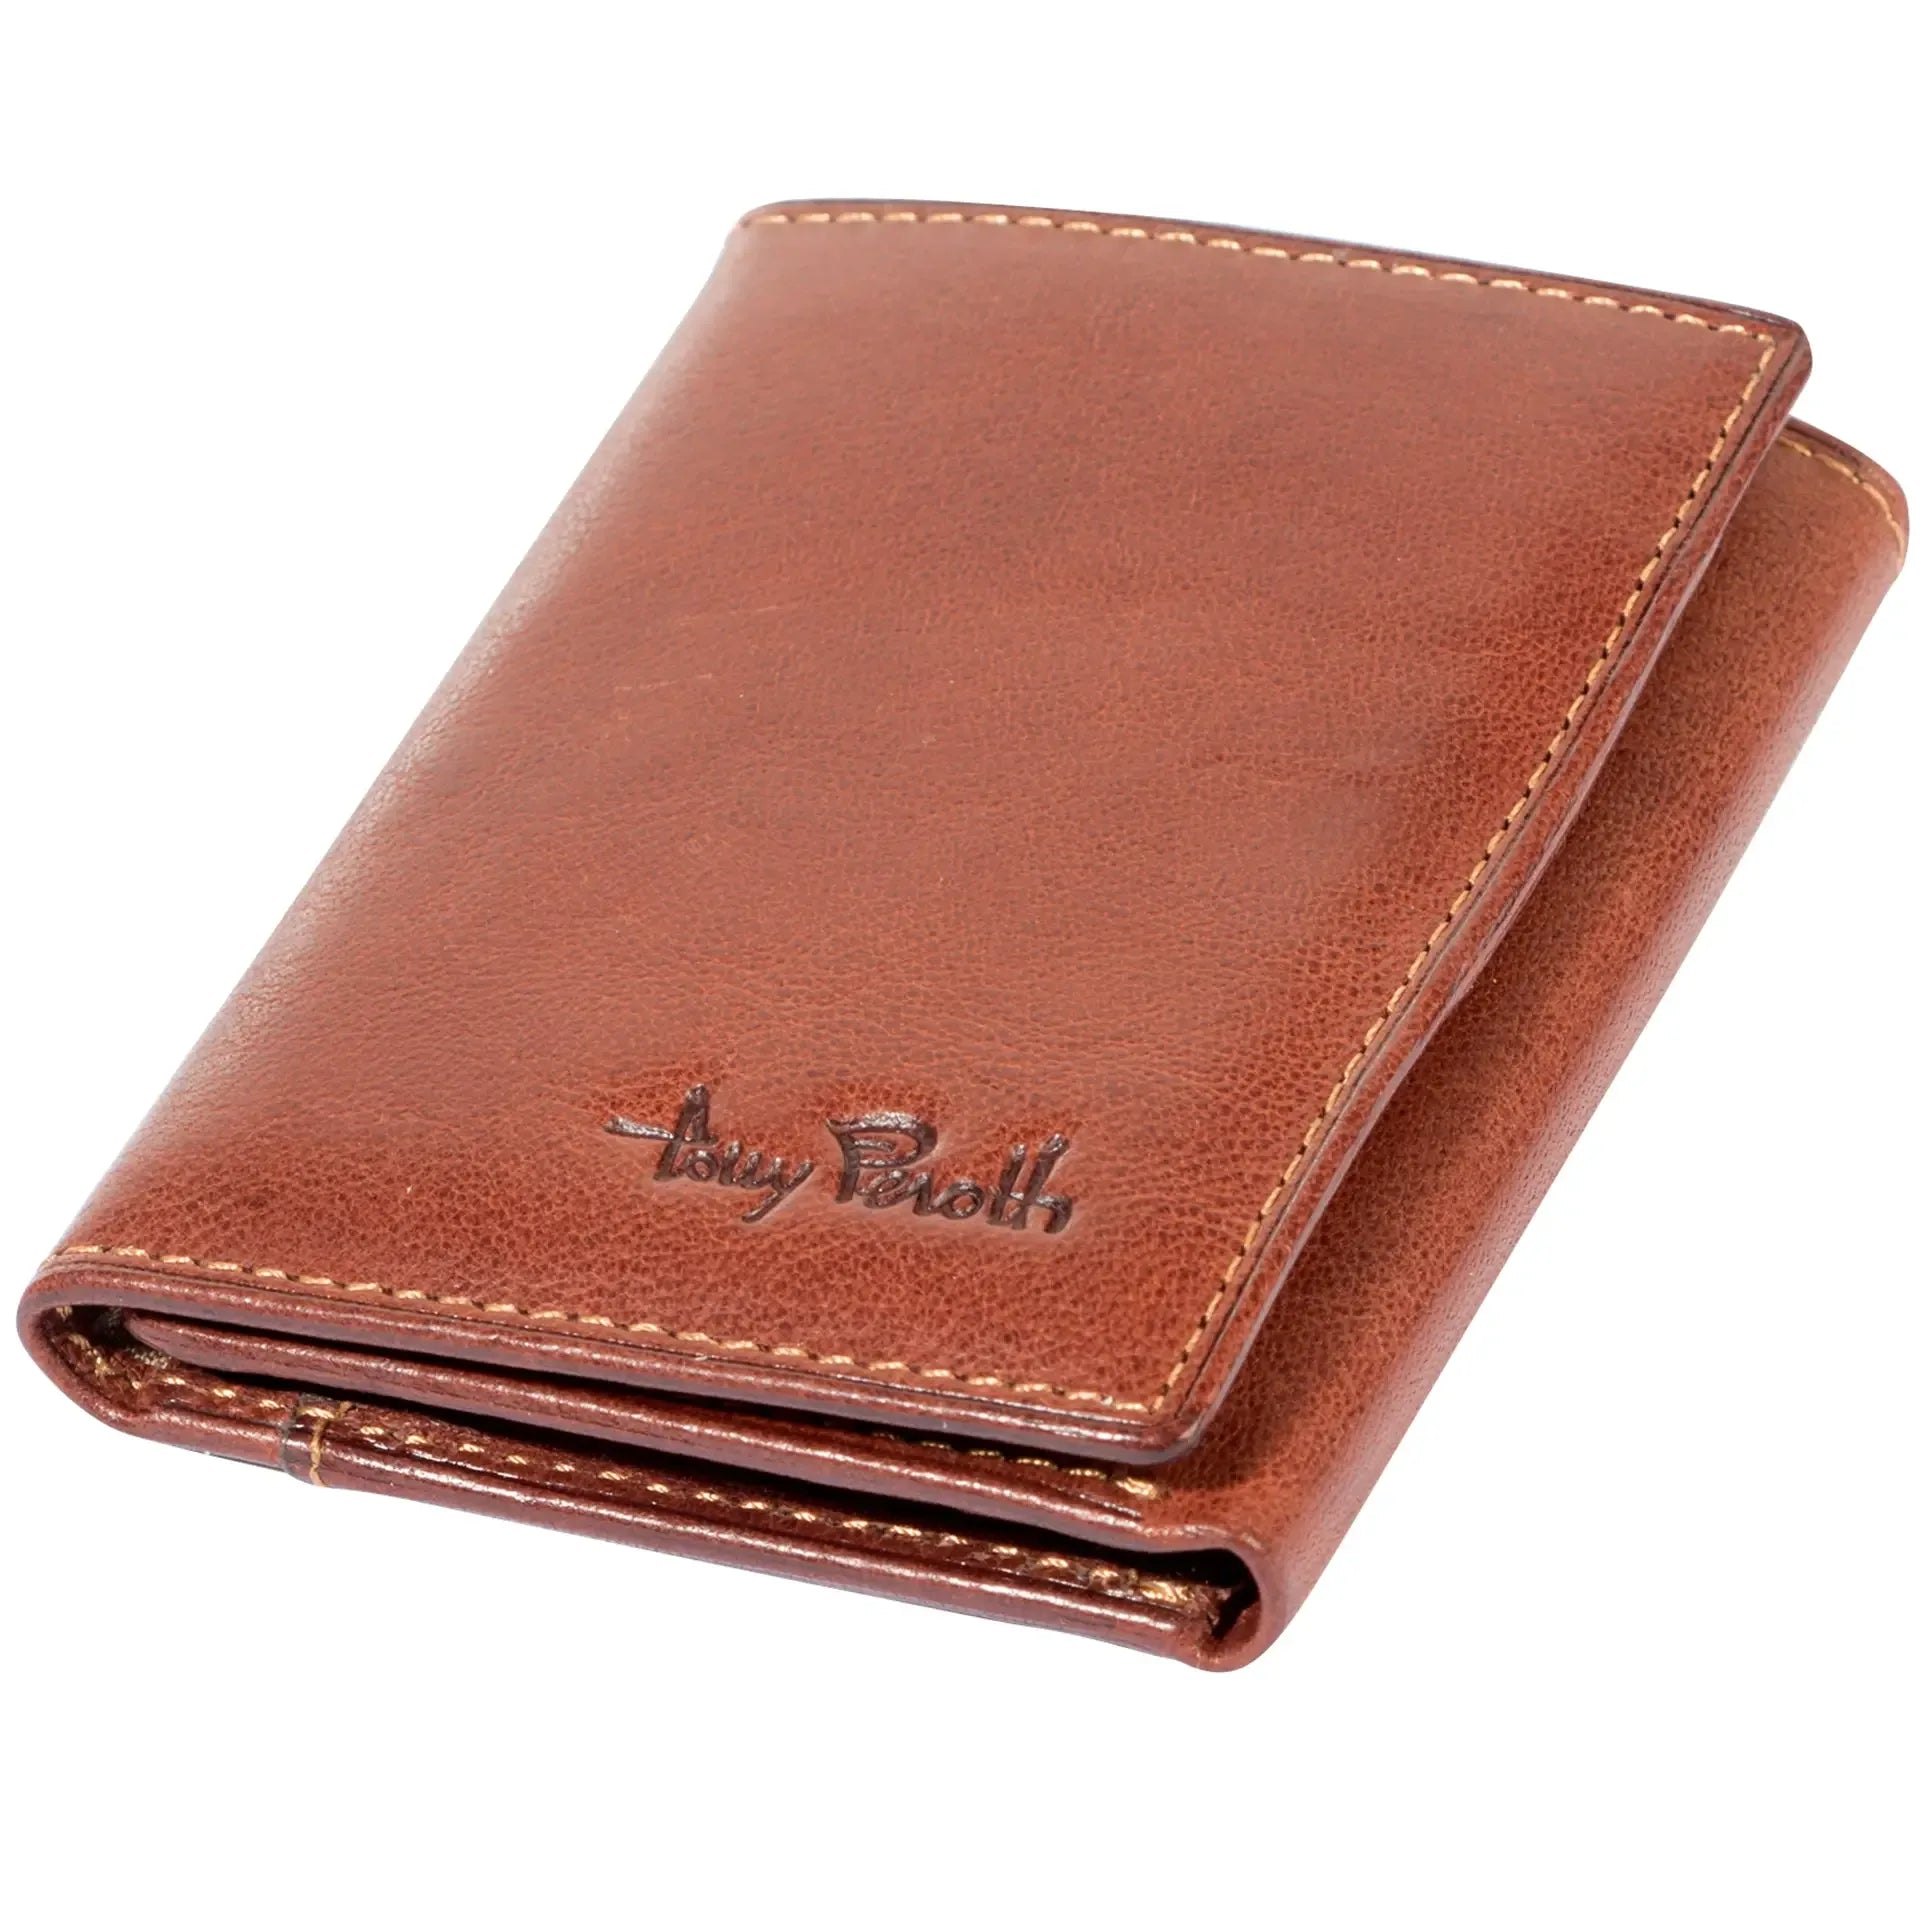 Tony Perotti Furbo Pure wallet 10 cm - Dark brown